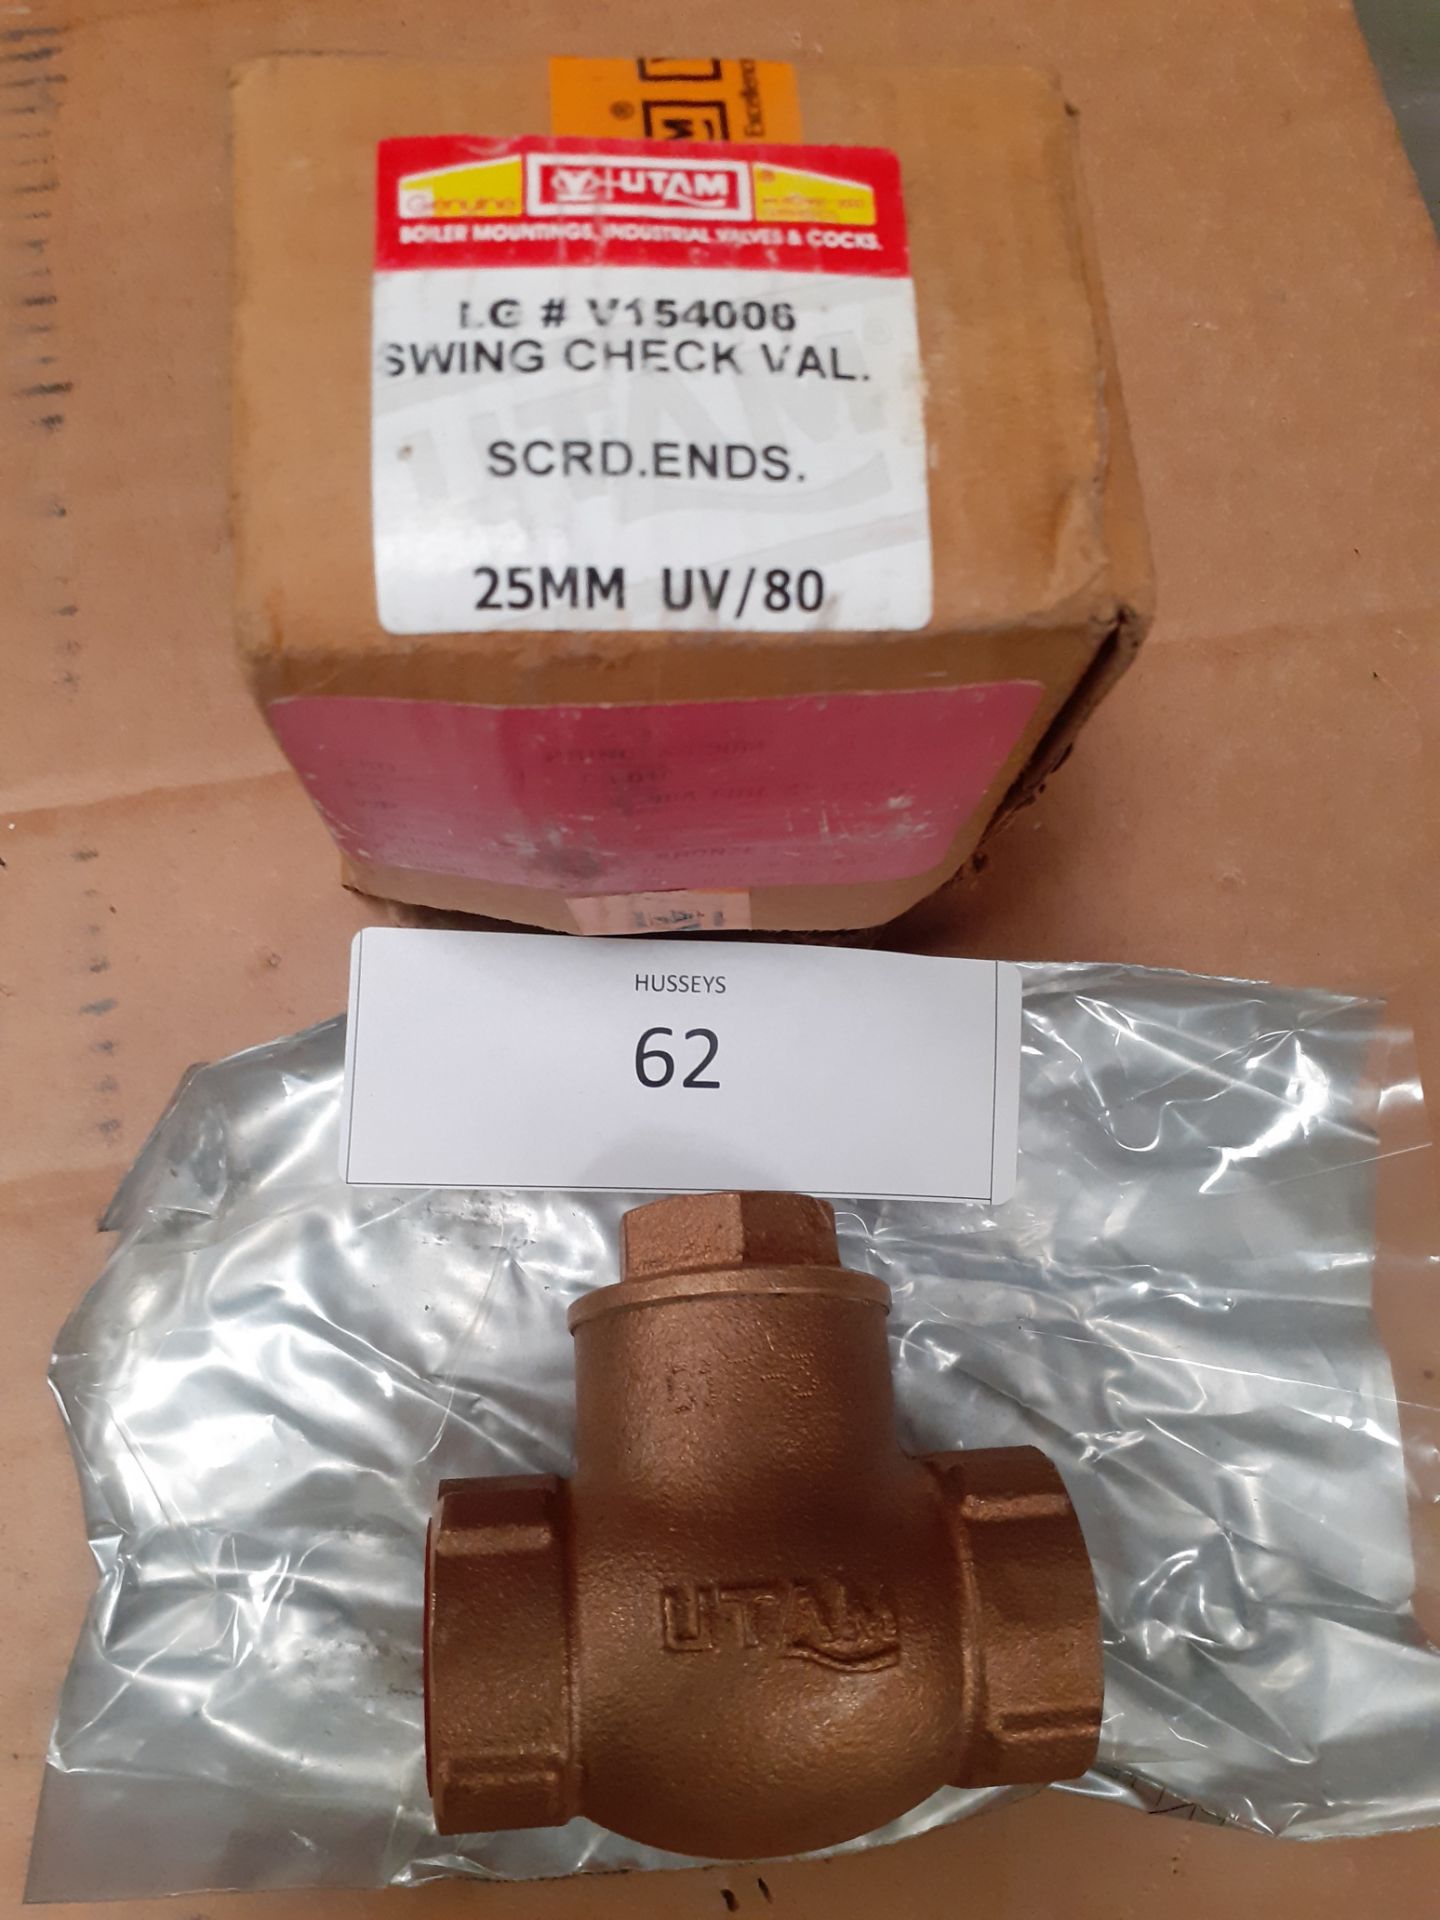 Swing check valve - bronze 1" BSP 25mm UV/80 LG# V154006 UTAM (Qnty: 1)